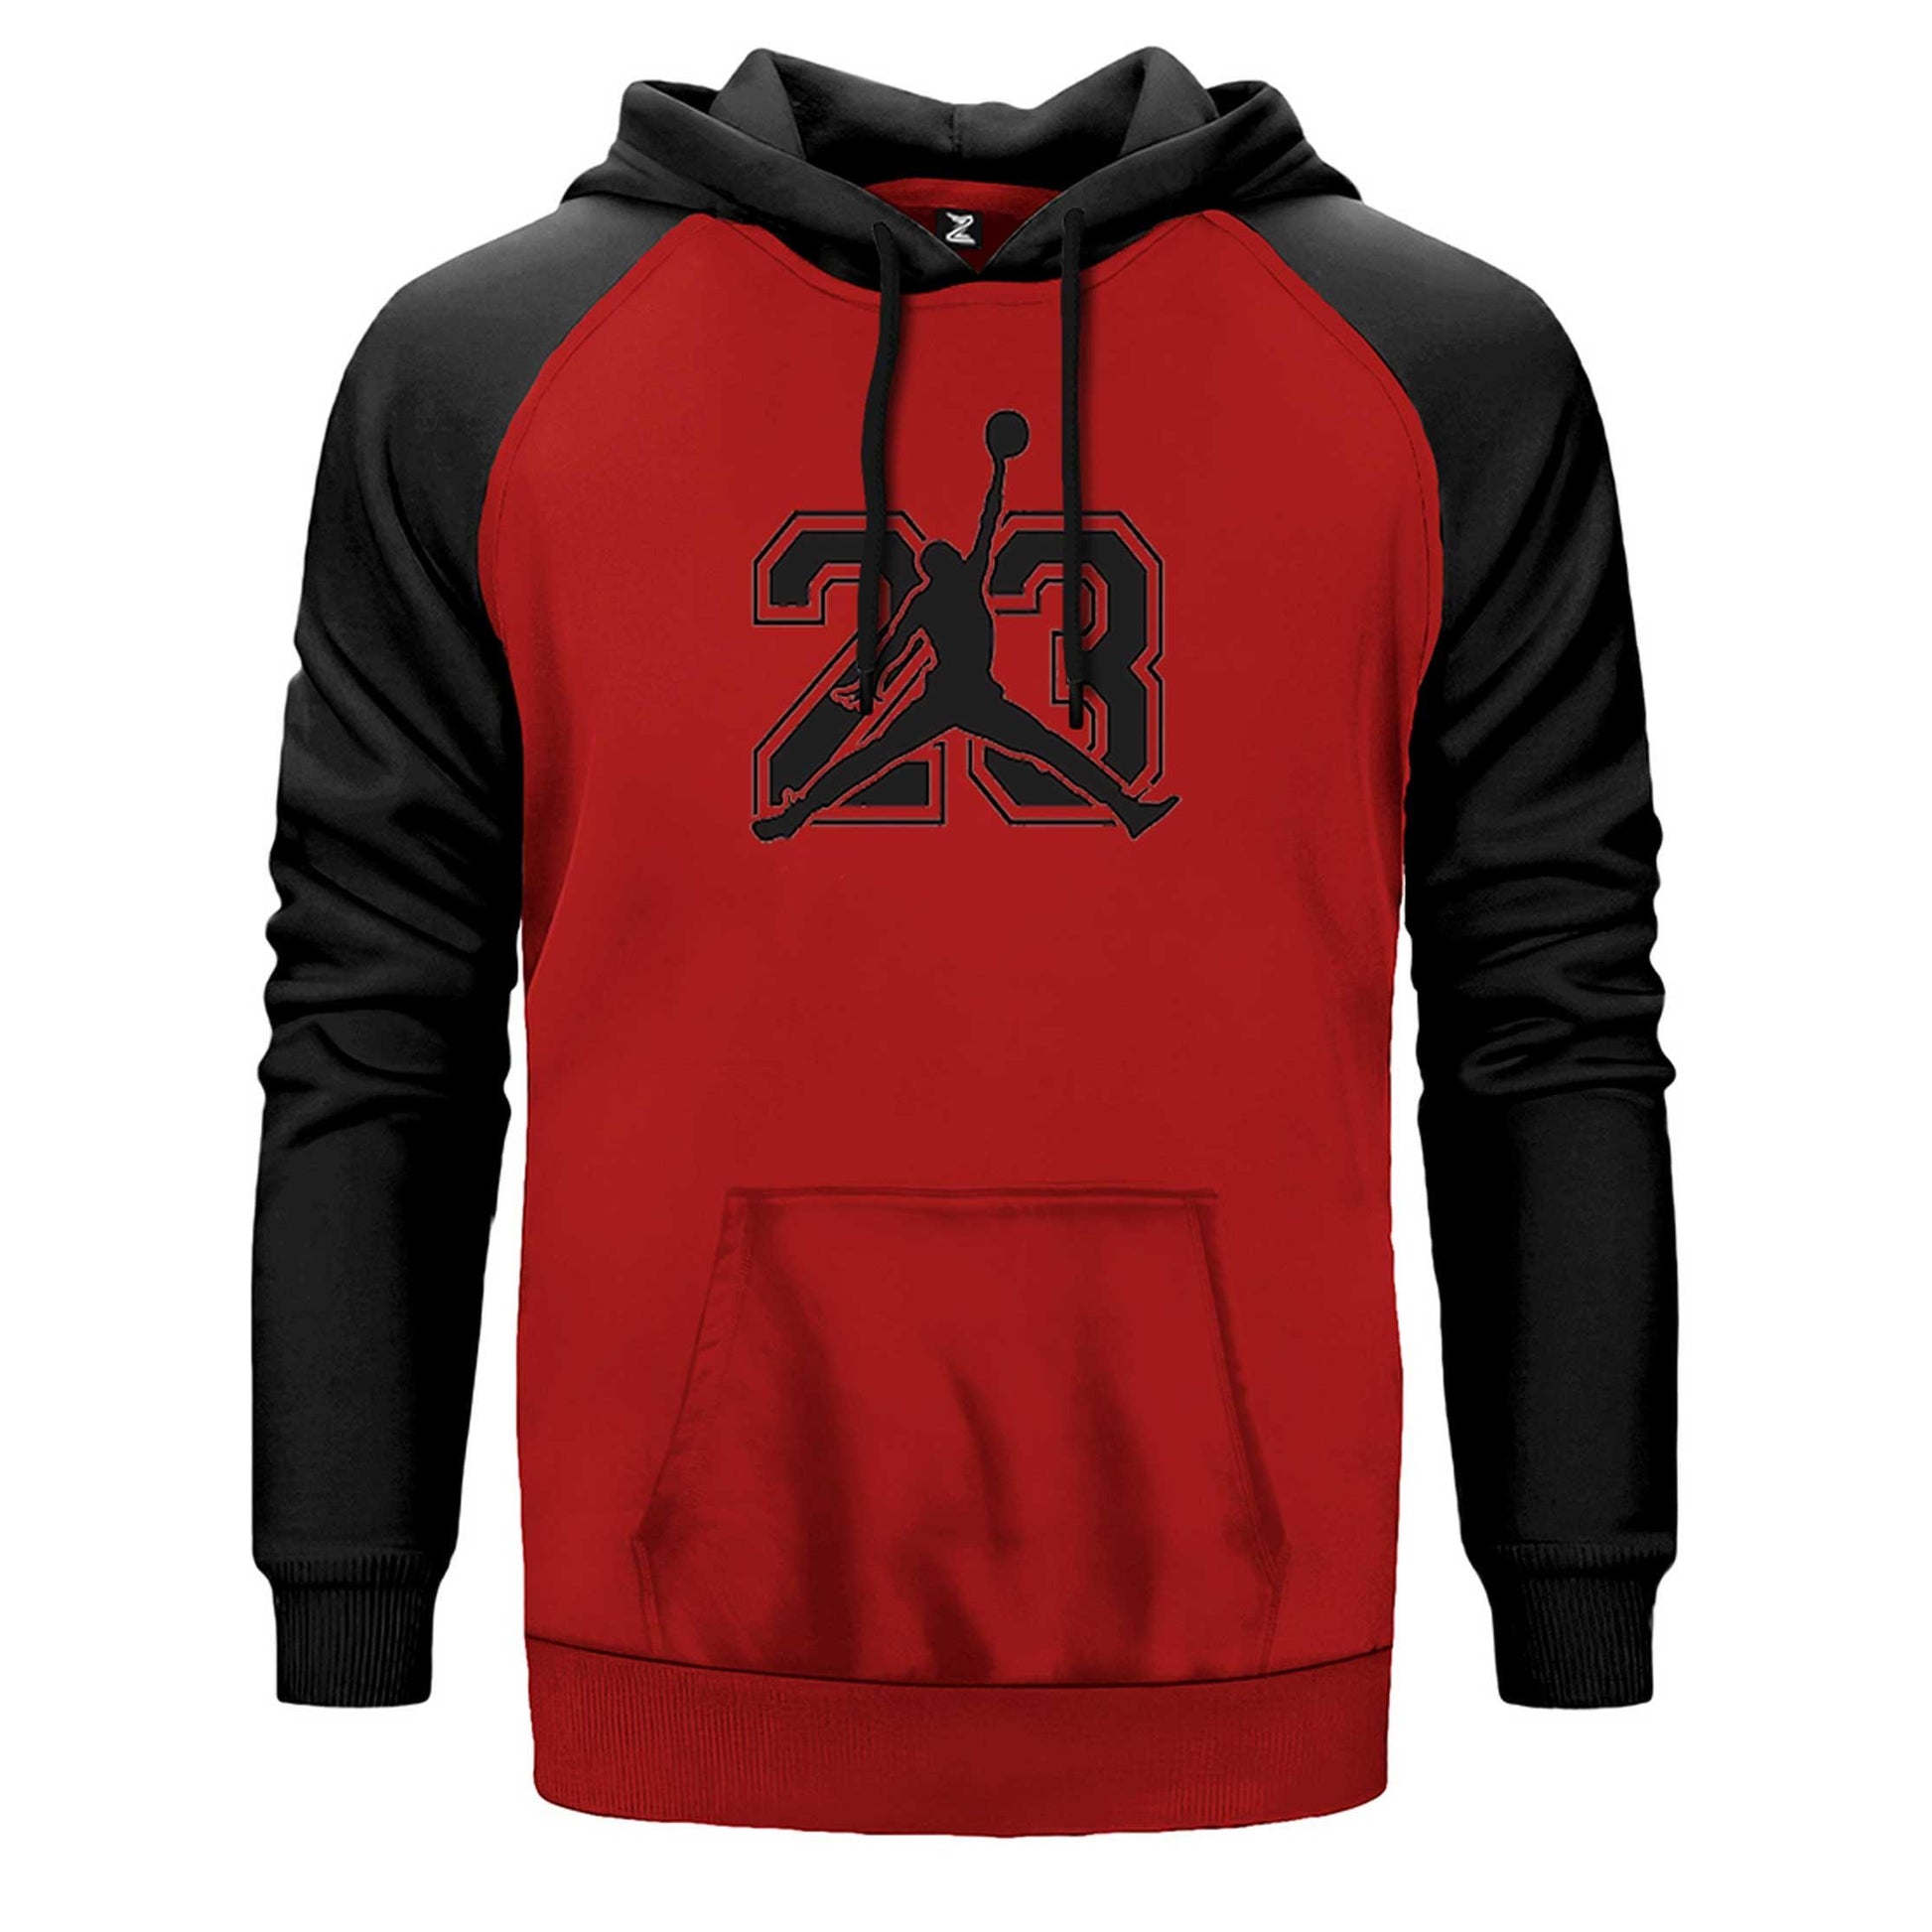 Jordan Black 23 Çift Renk Reglan Kol Sweatshirt - Zepplingiyim